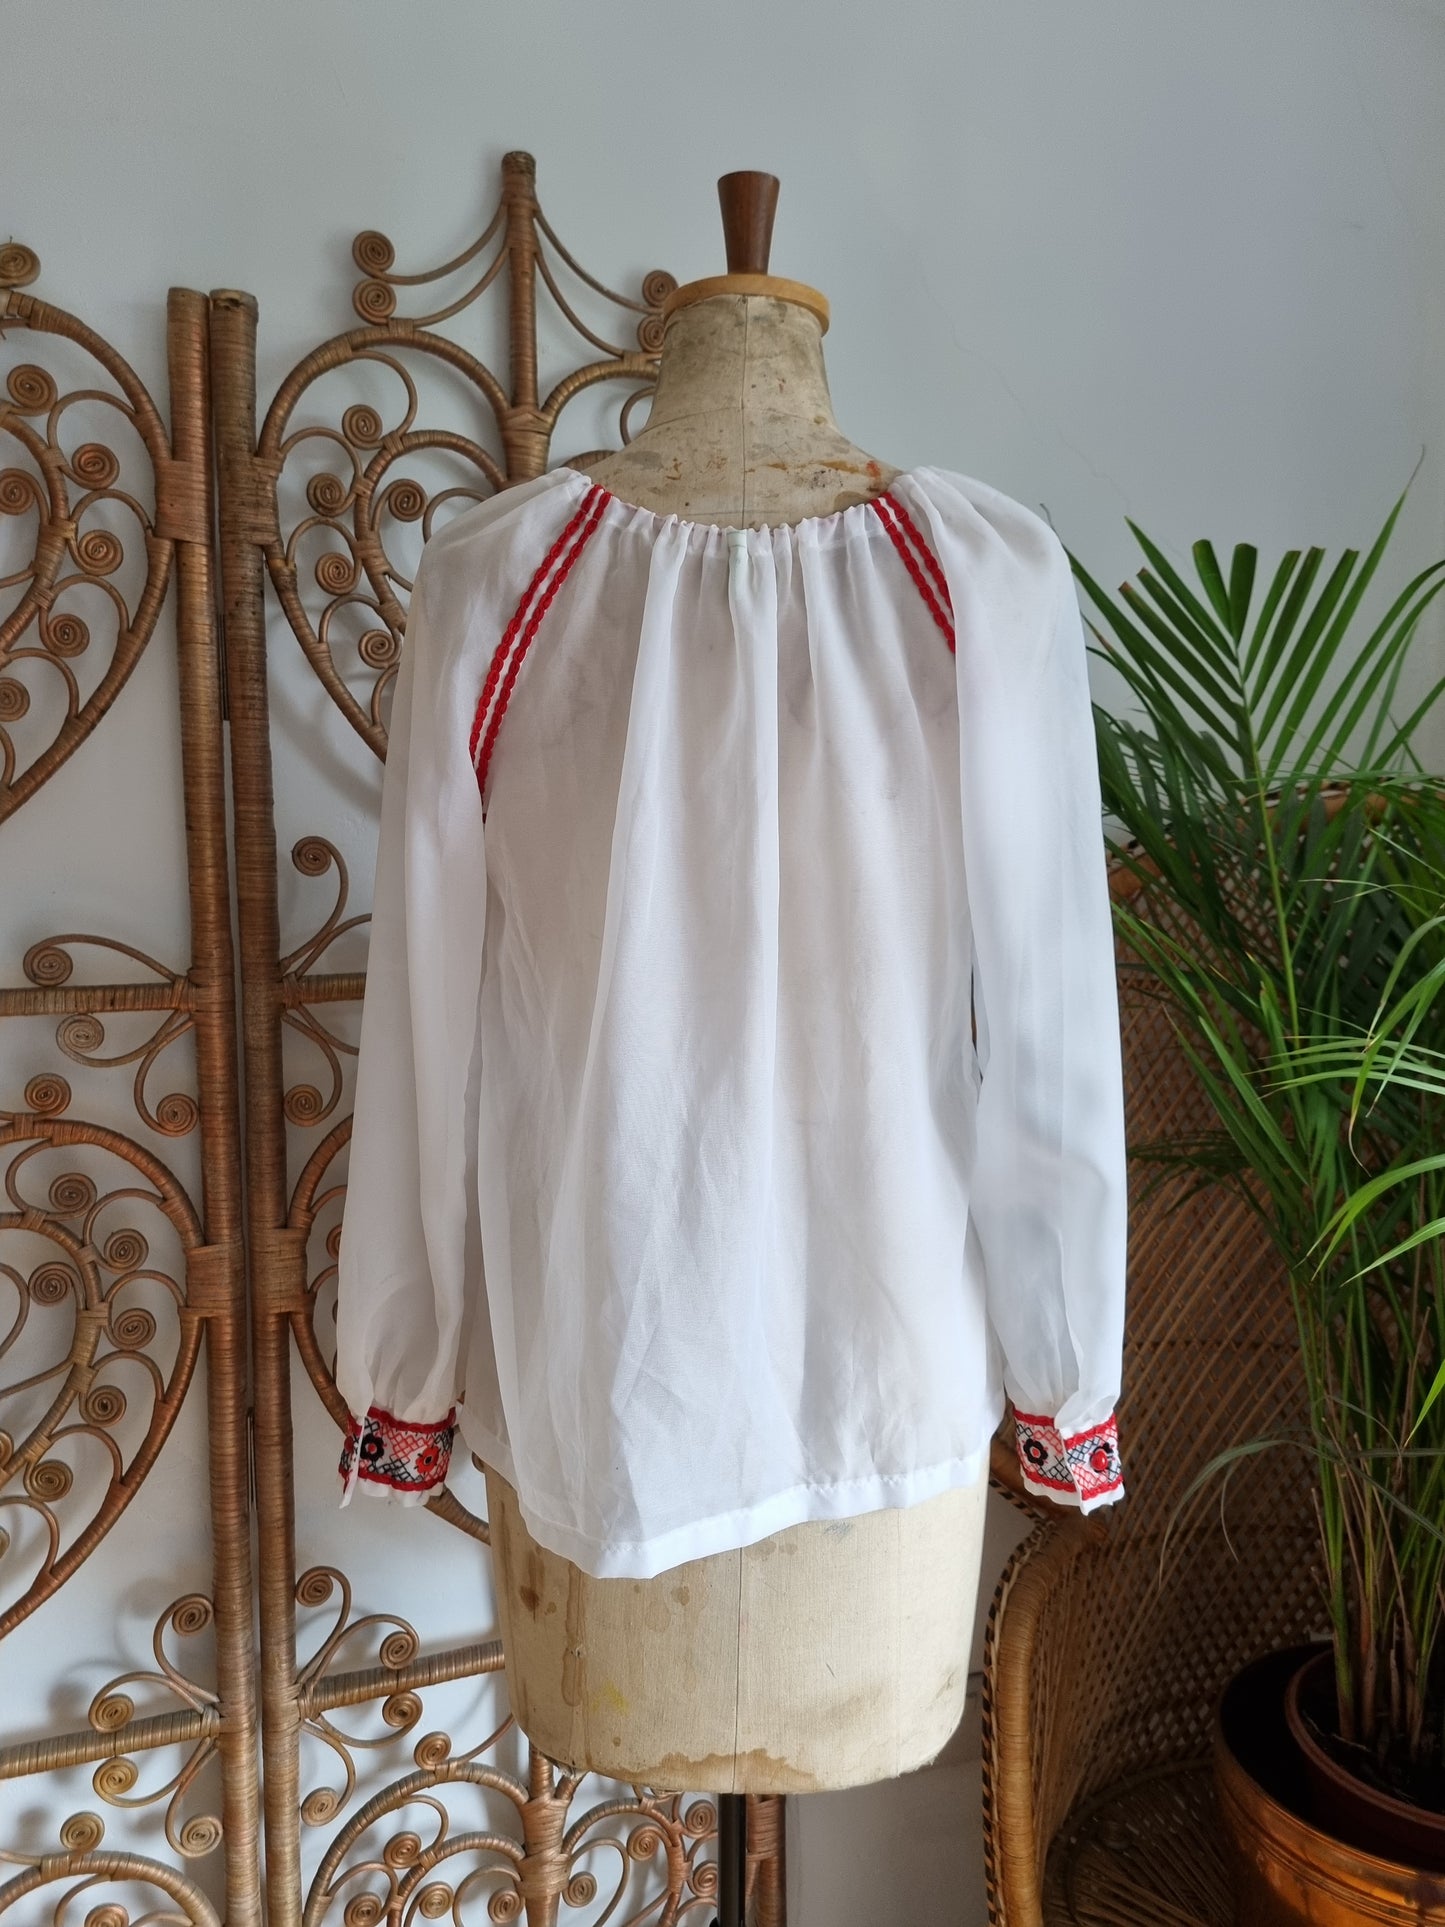 Vintage sheer embroidered blouse